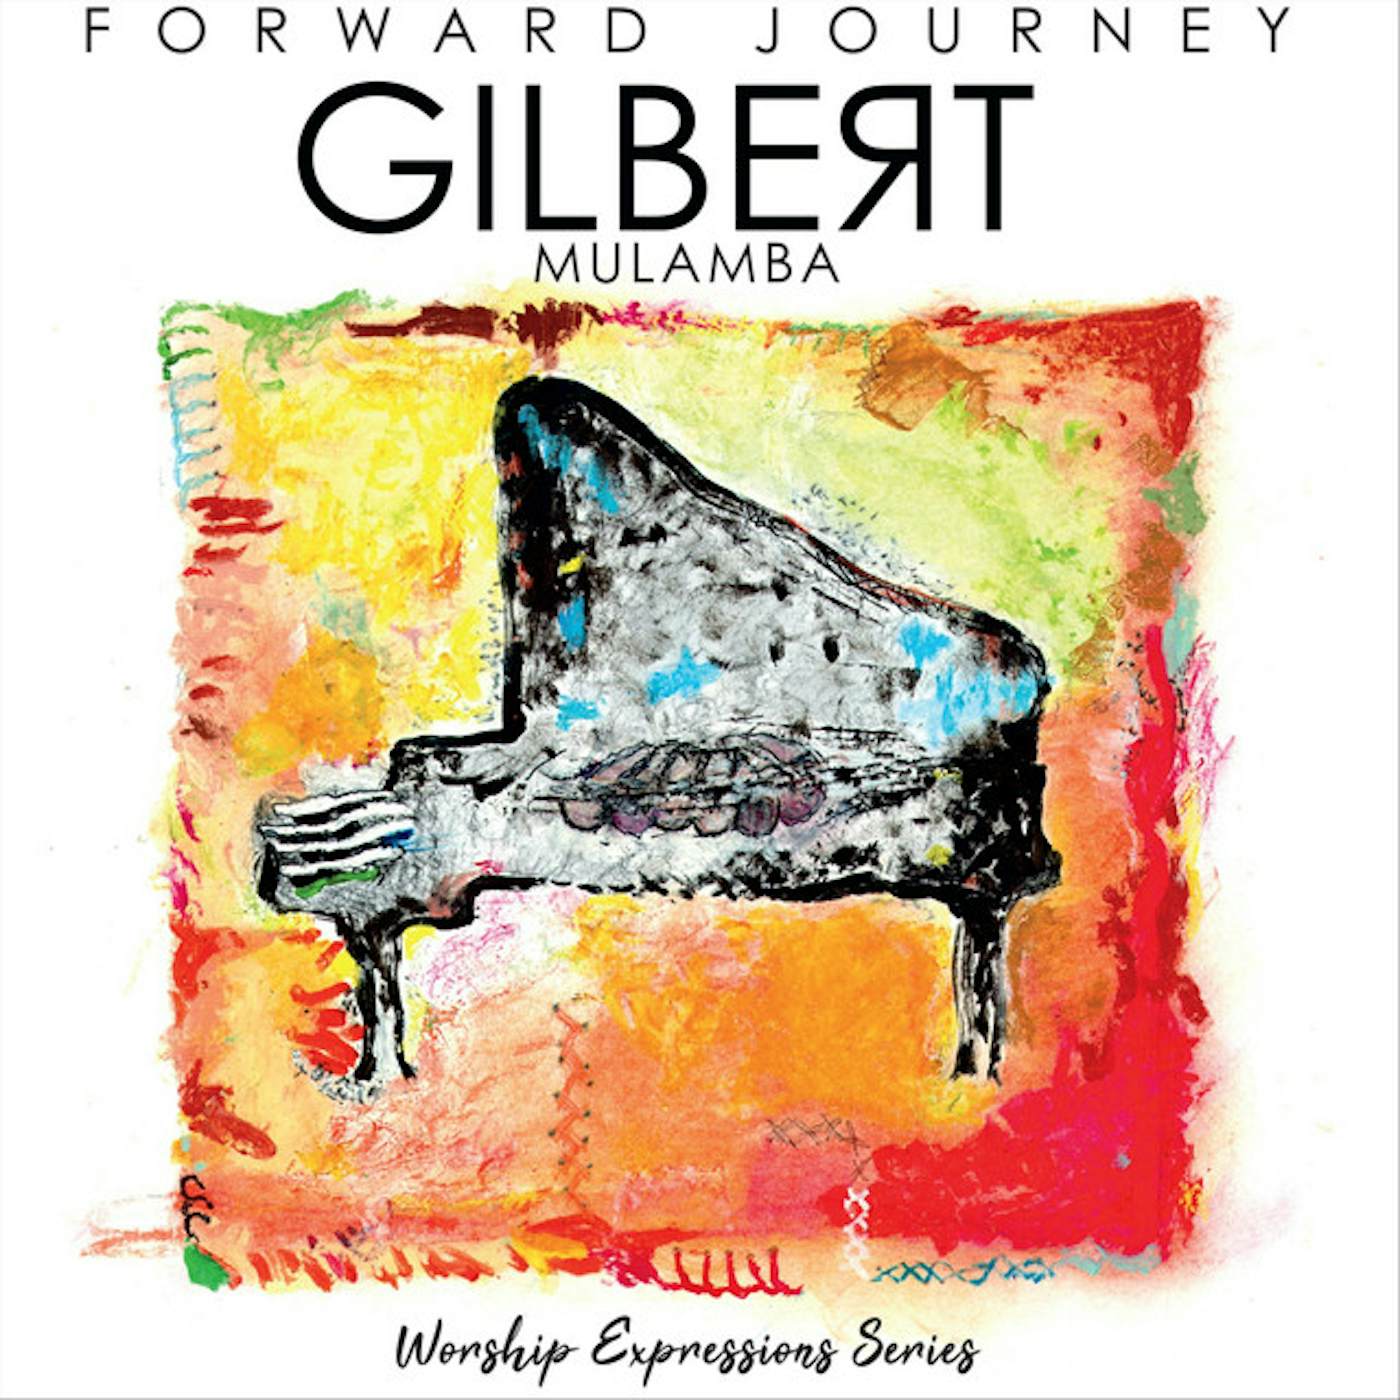 Gilbert Mulamba FORWARD JOURNEY CD